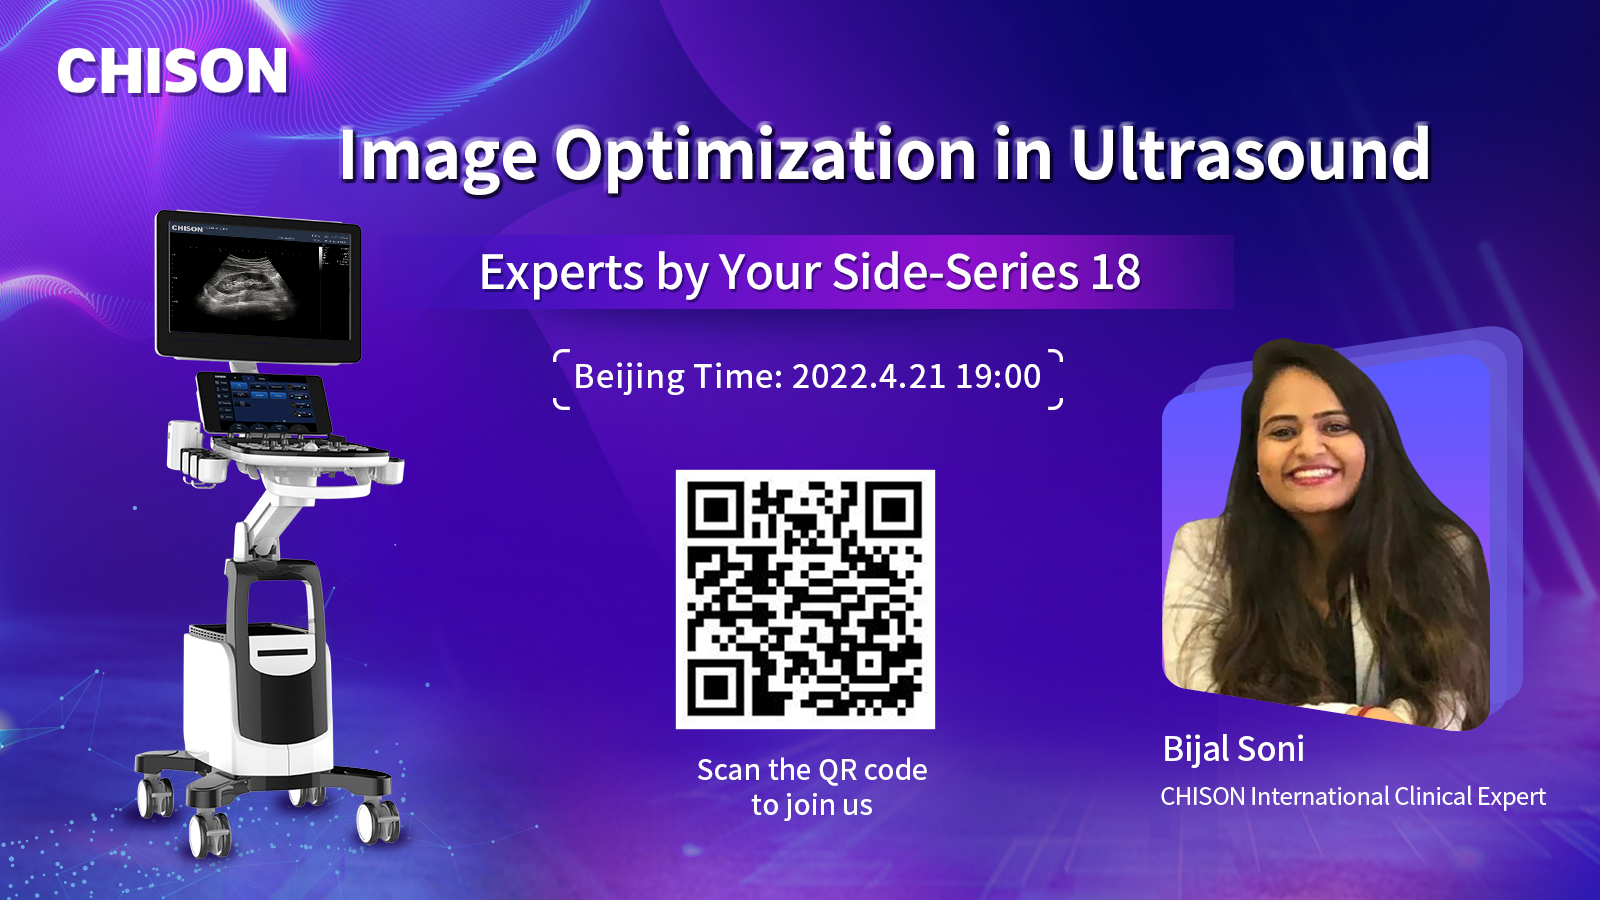 Image optimization in Ultrasound